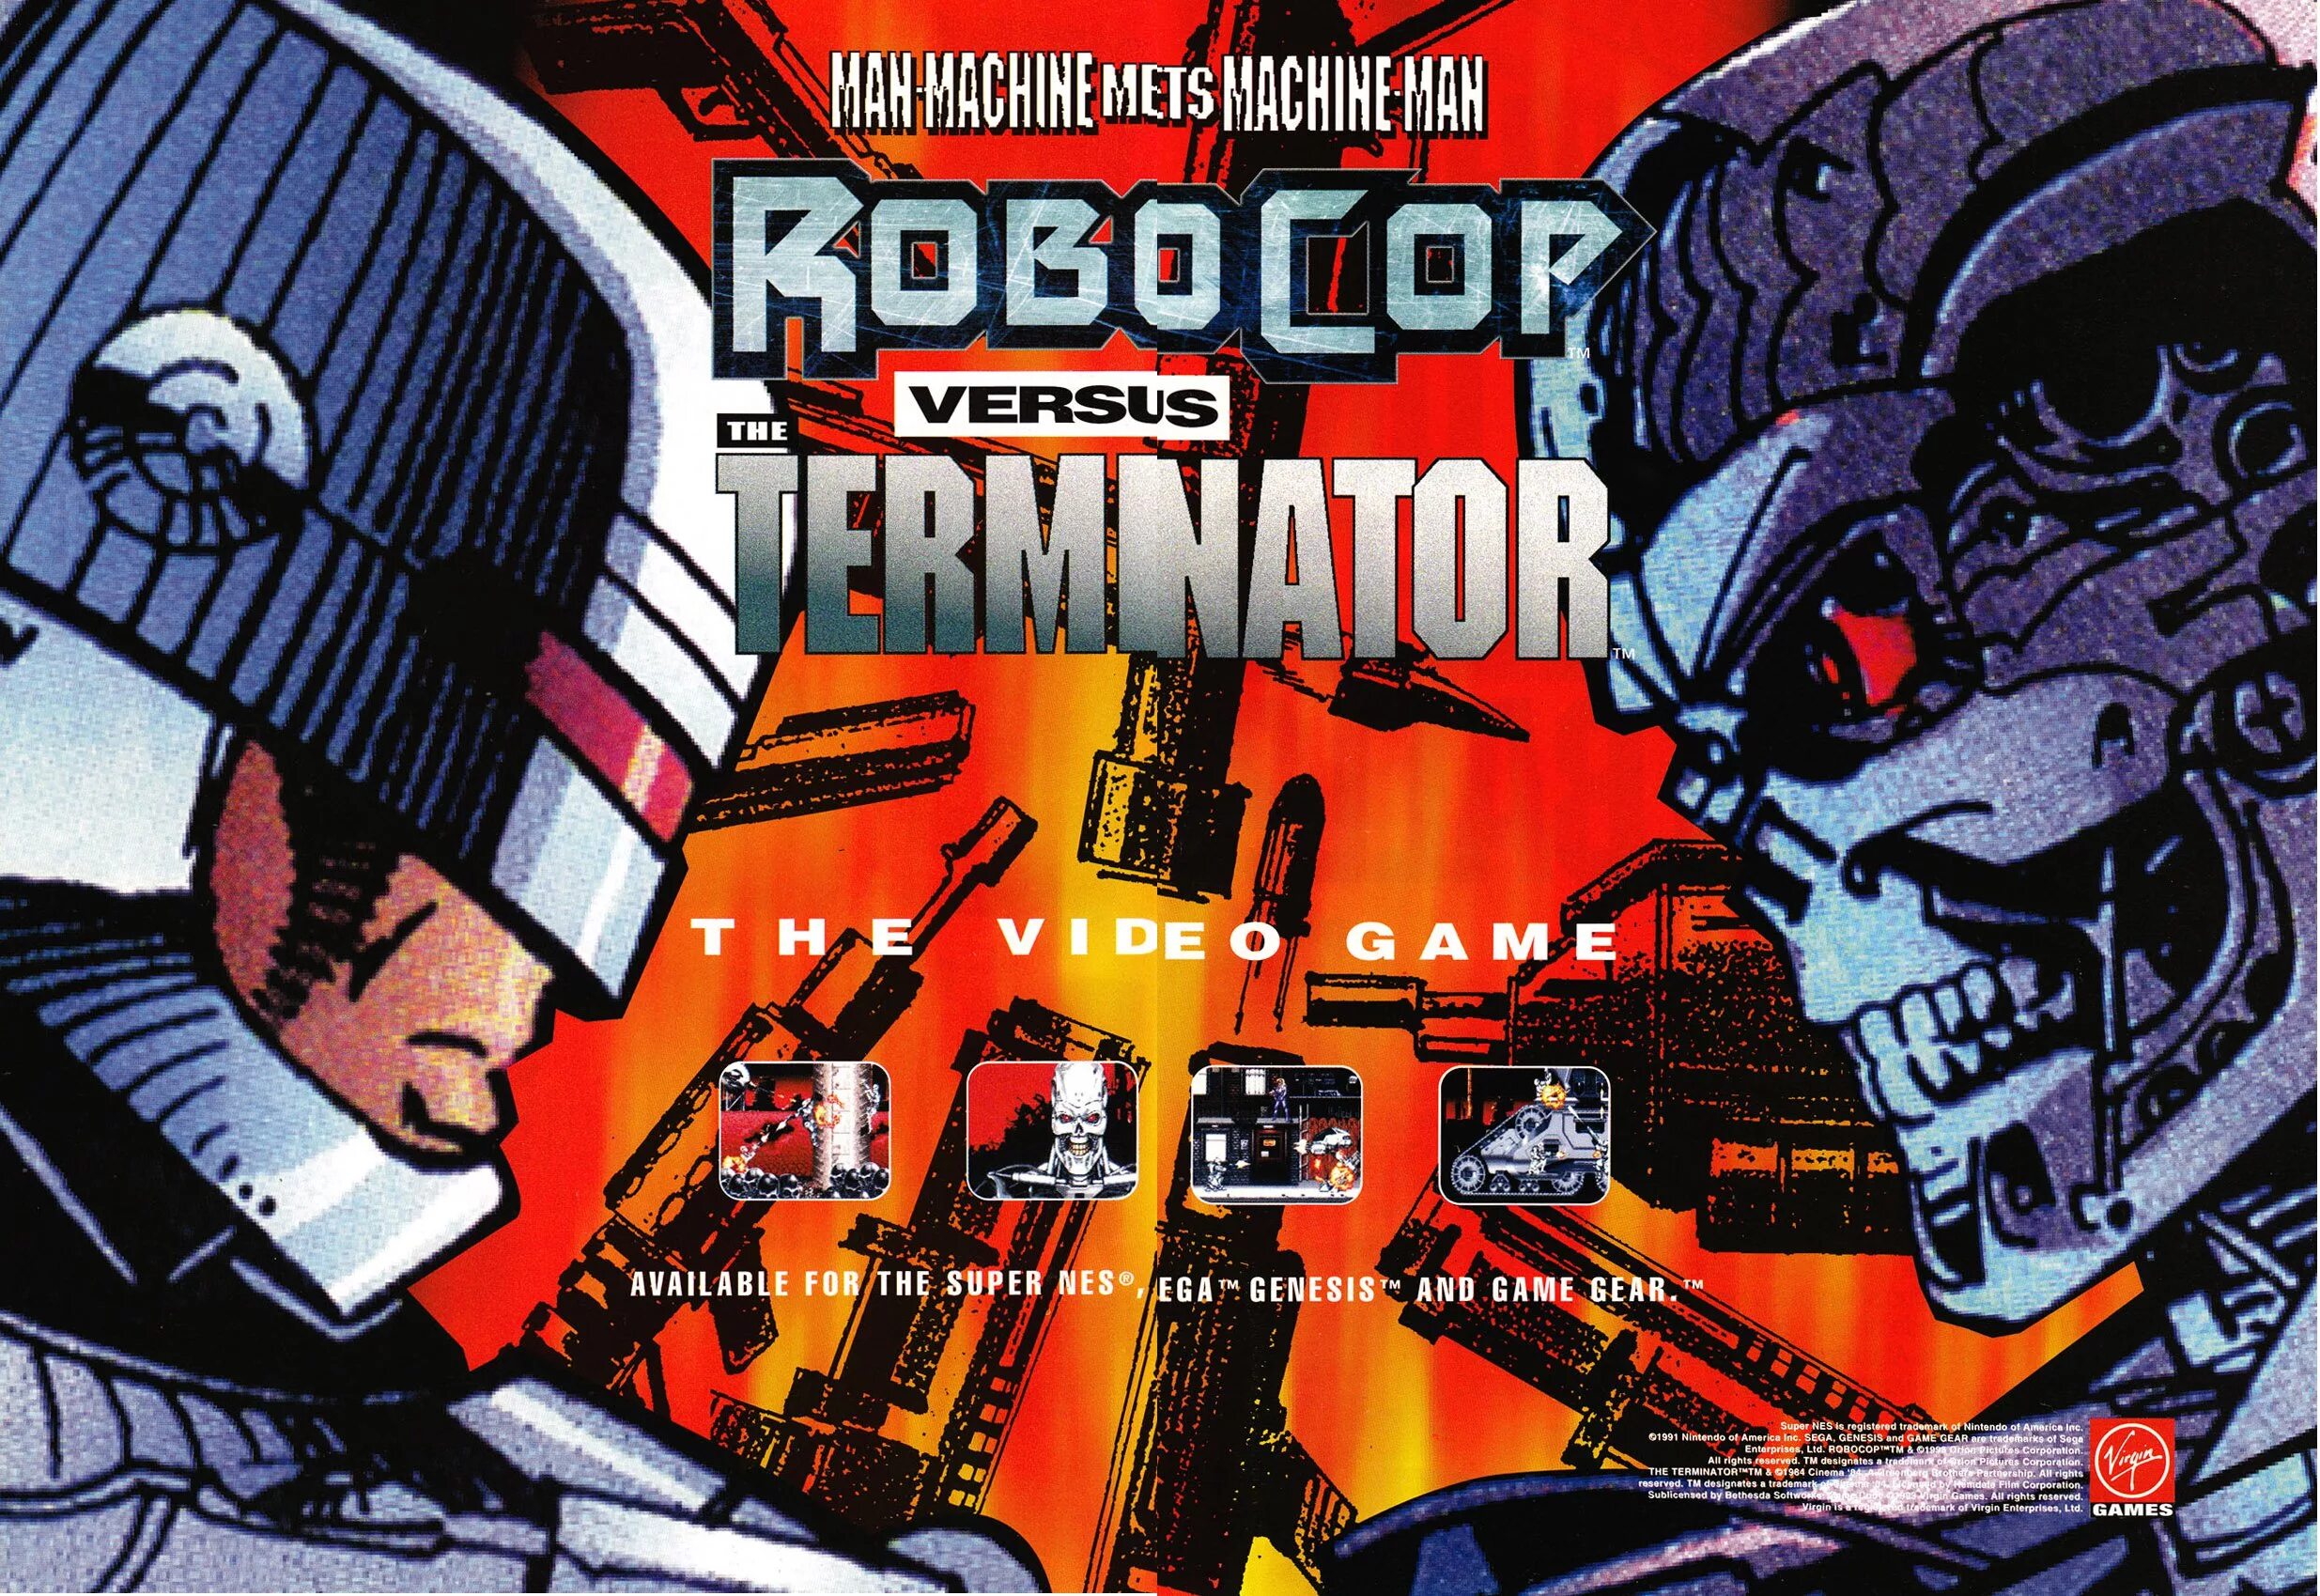 Терминатор 1 Sega. Robocop vs Terminator сега обложка. Игра Sega: Robocop versus Terminator. Robocop vs Terminator игра. Robocop vs terminator